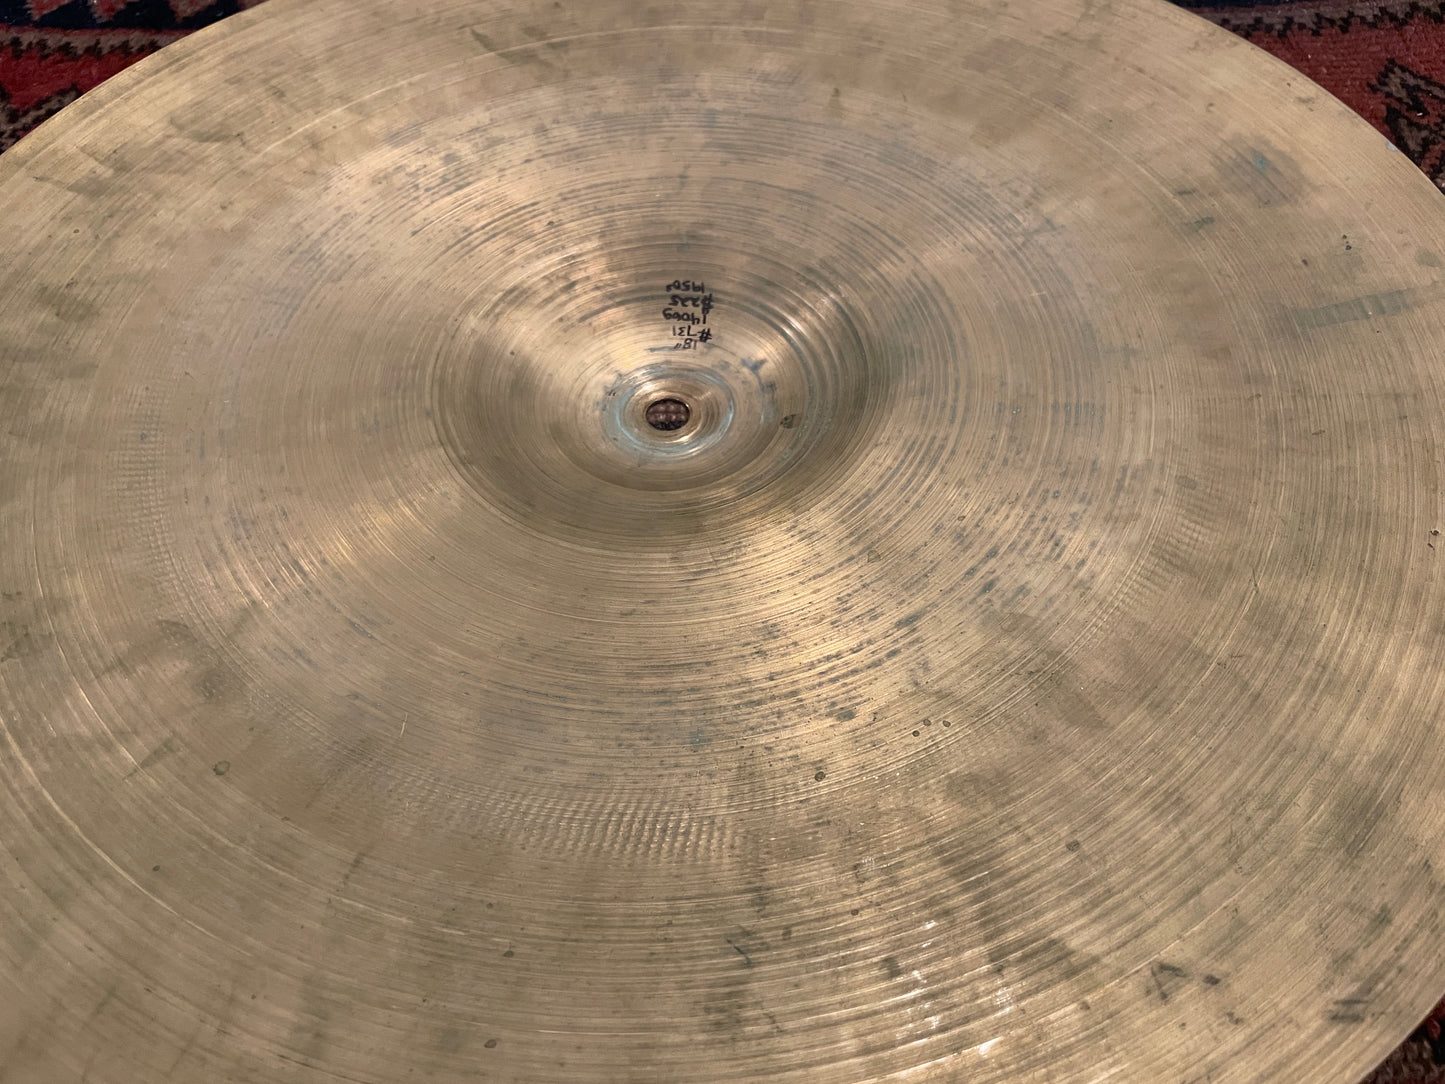 18" Zildjian A 1950s Medium Thin Ride Cymbal 1406g #731